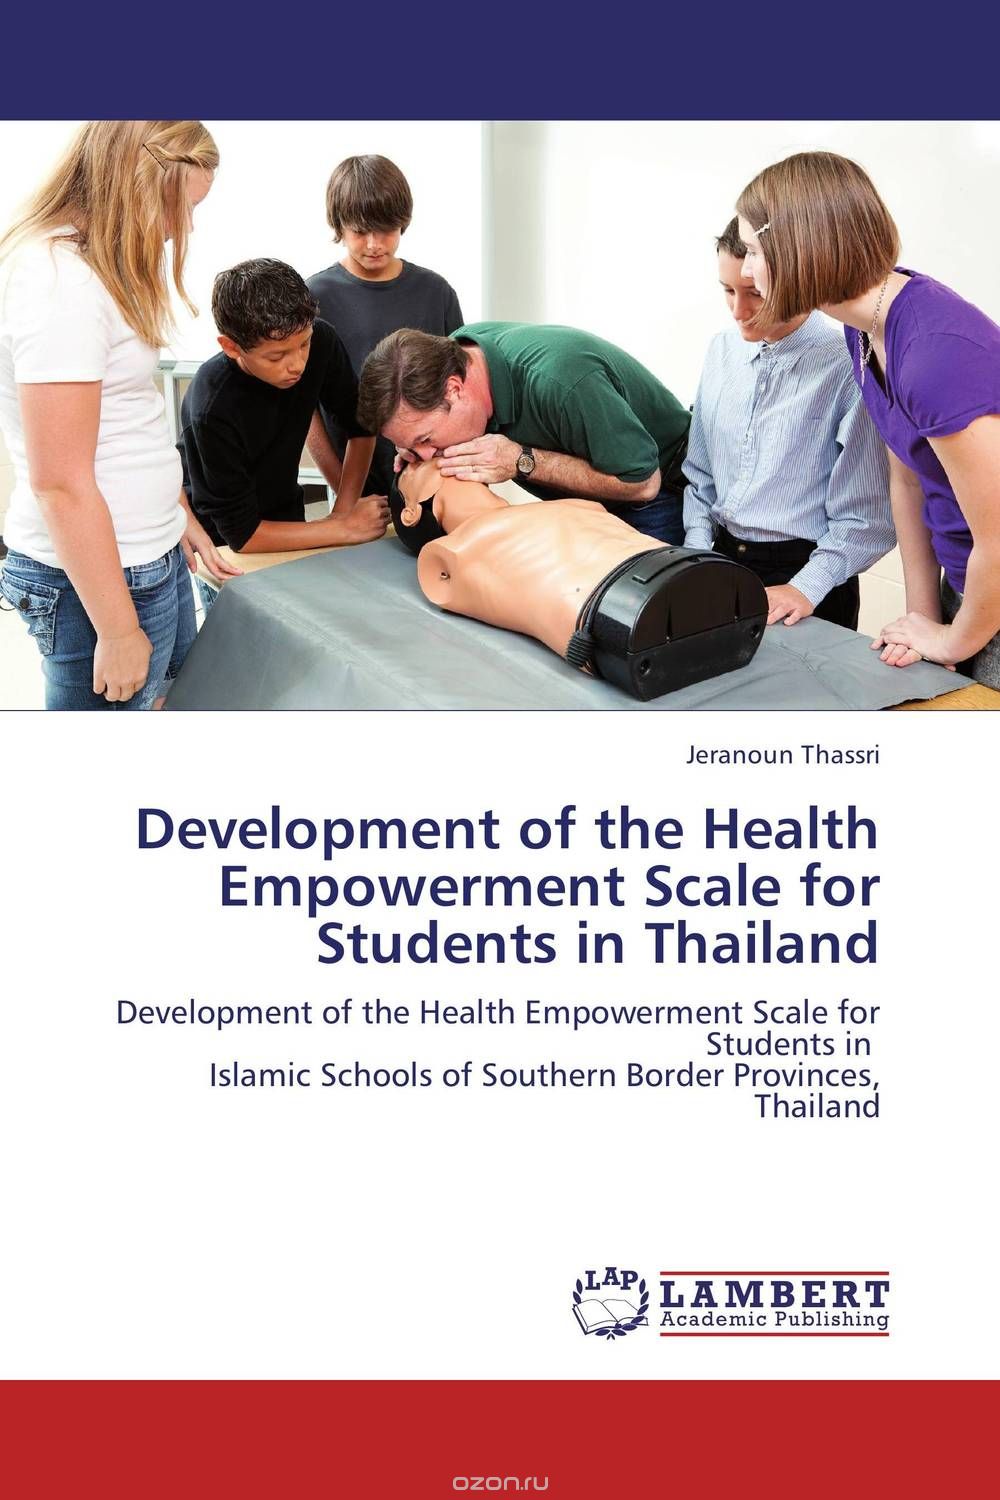 Скачать книгу "Development of the Health Empowerment Scale for Students in Thailand"